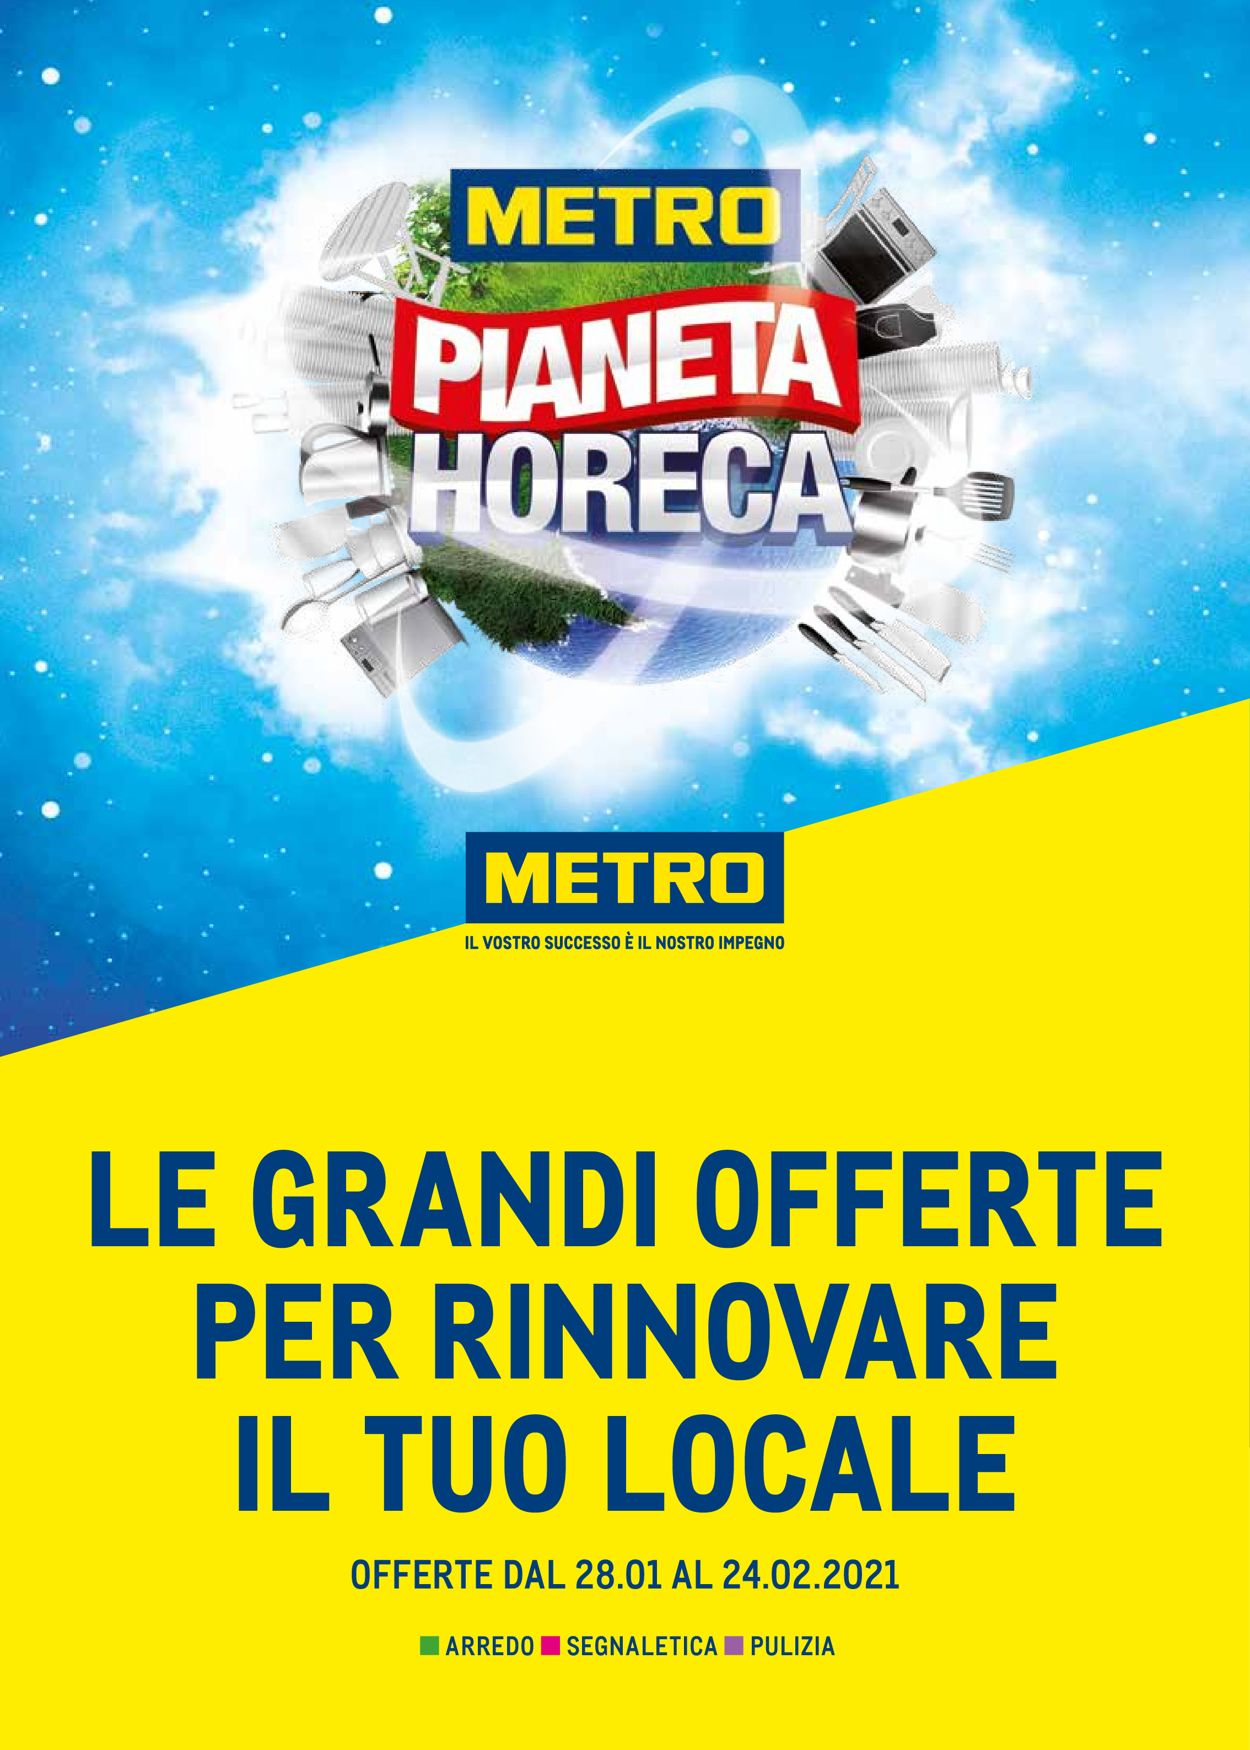 Volantino Metro - PIANETA HORECA 2021 - Offerte 28/01-24/02/2021